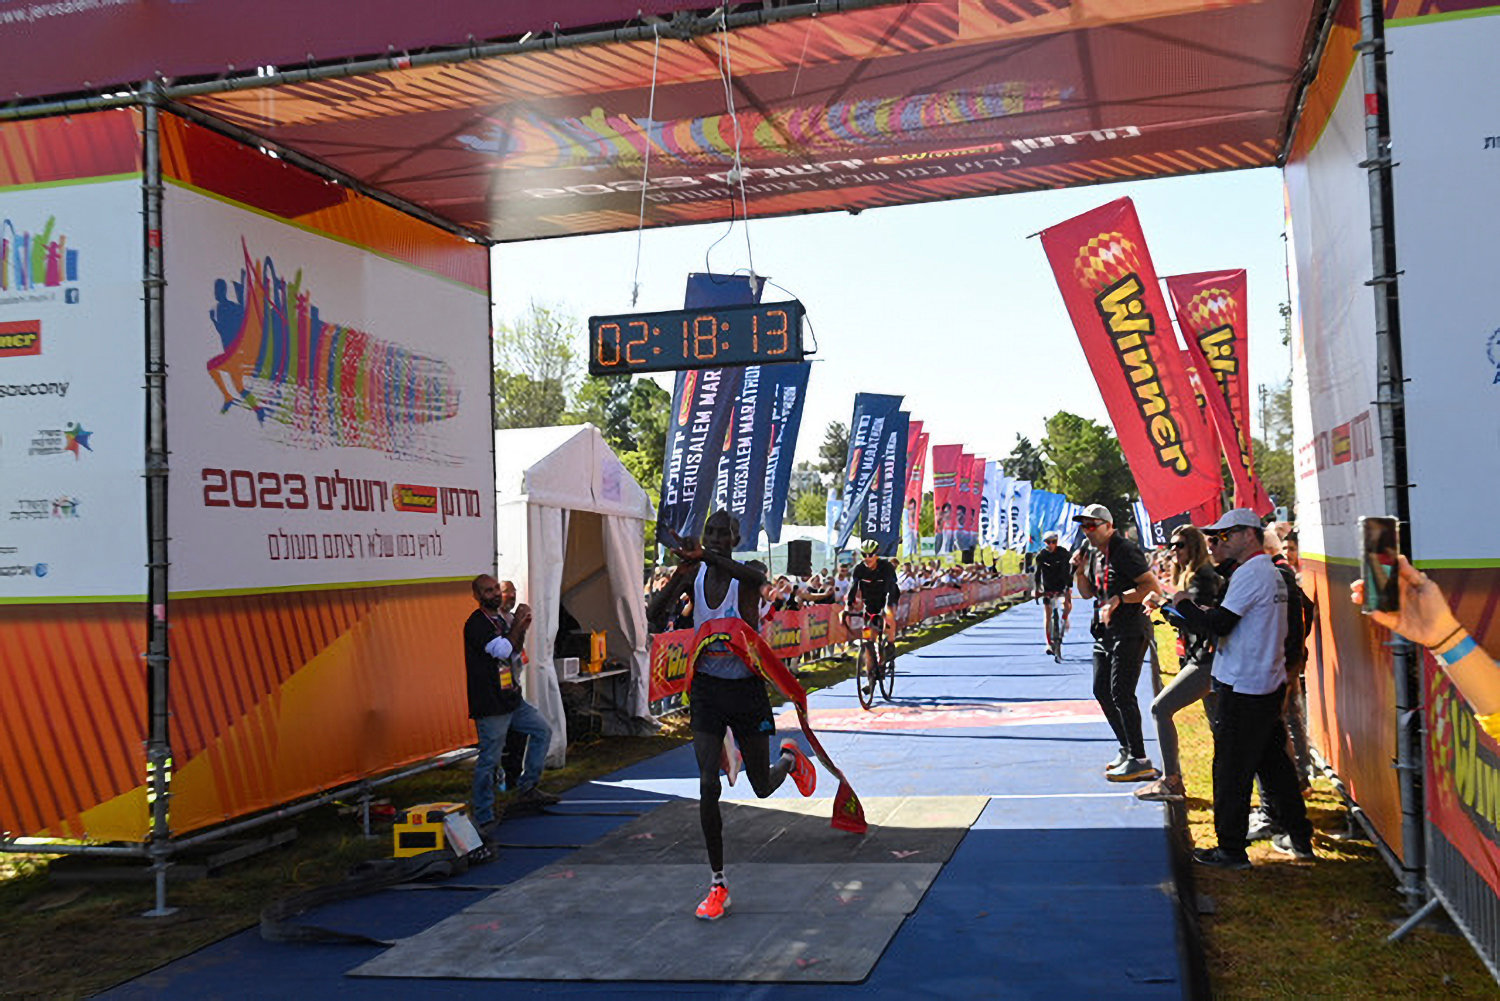 The winner of the International Jerusalem Winner Marathon on March 17 Noah Kigen Kiprotich crosses the finish line.